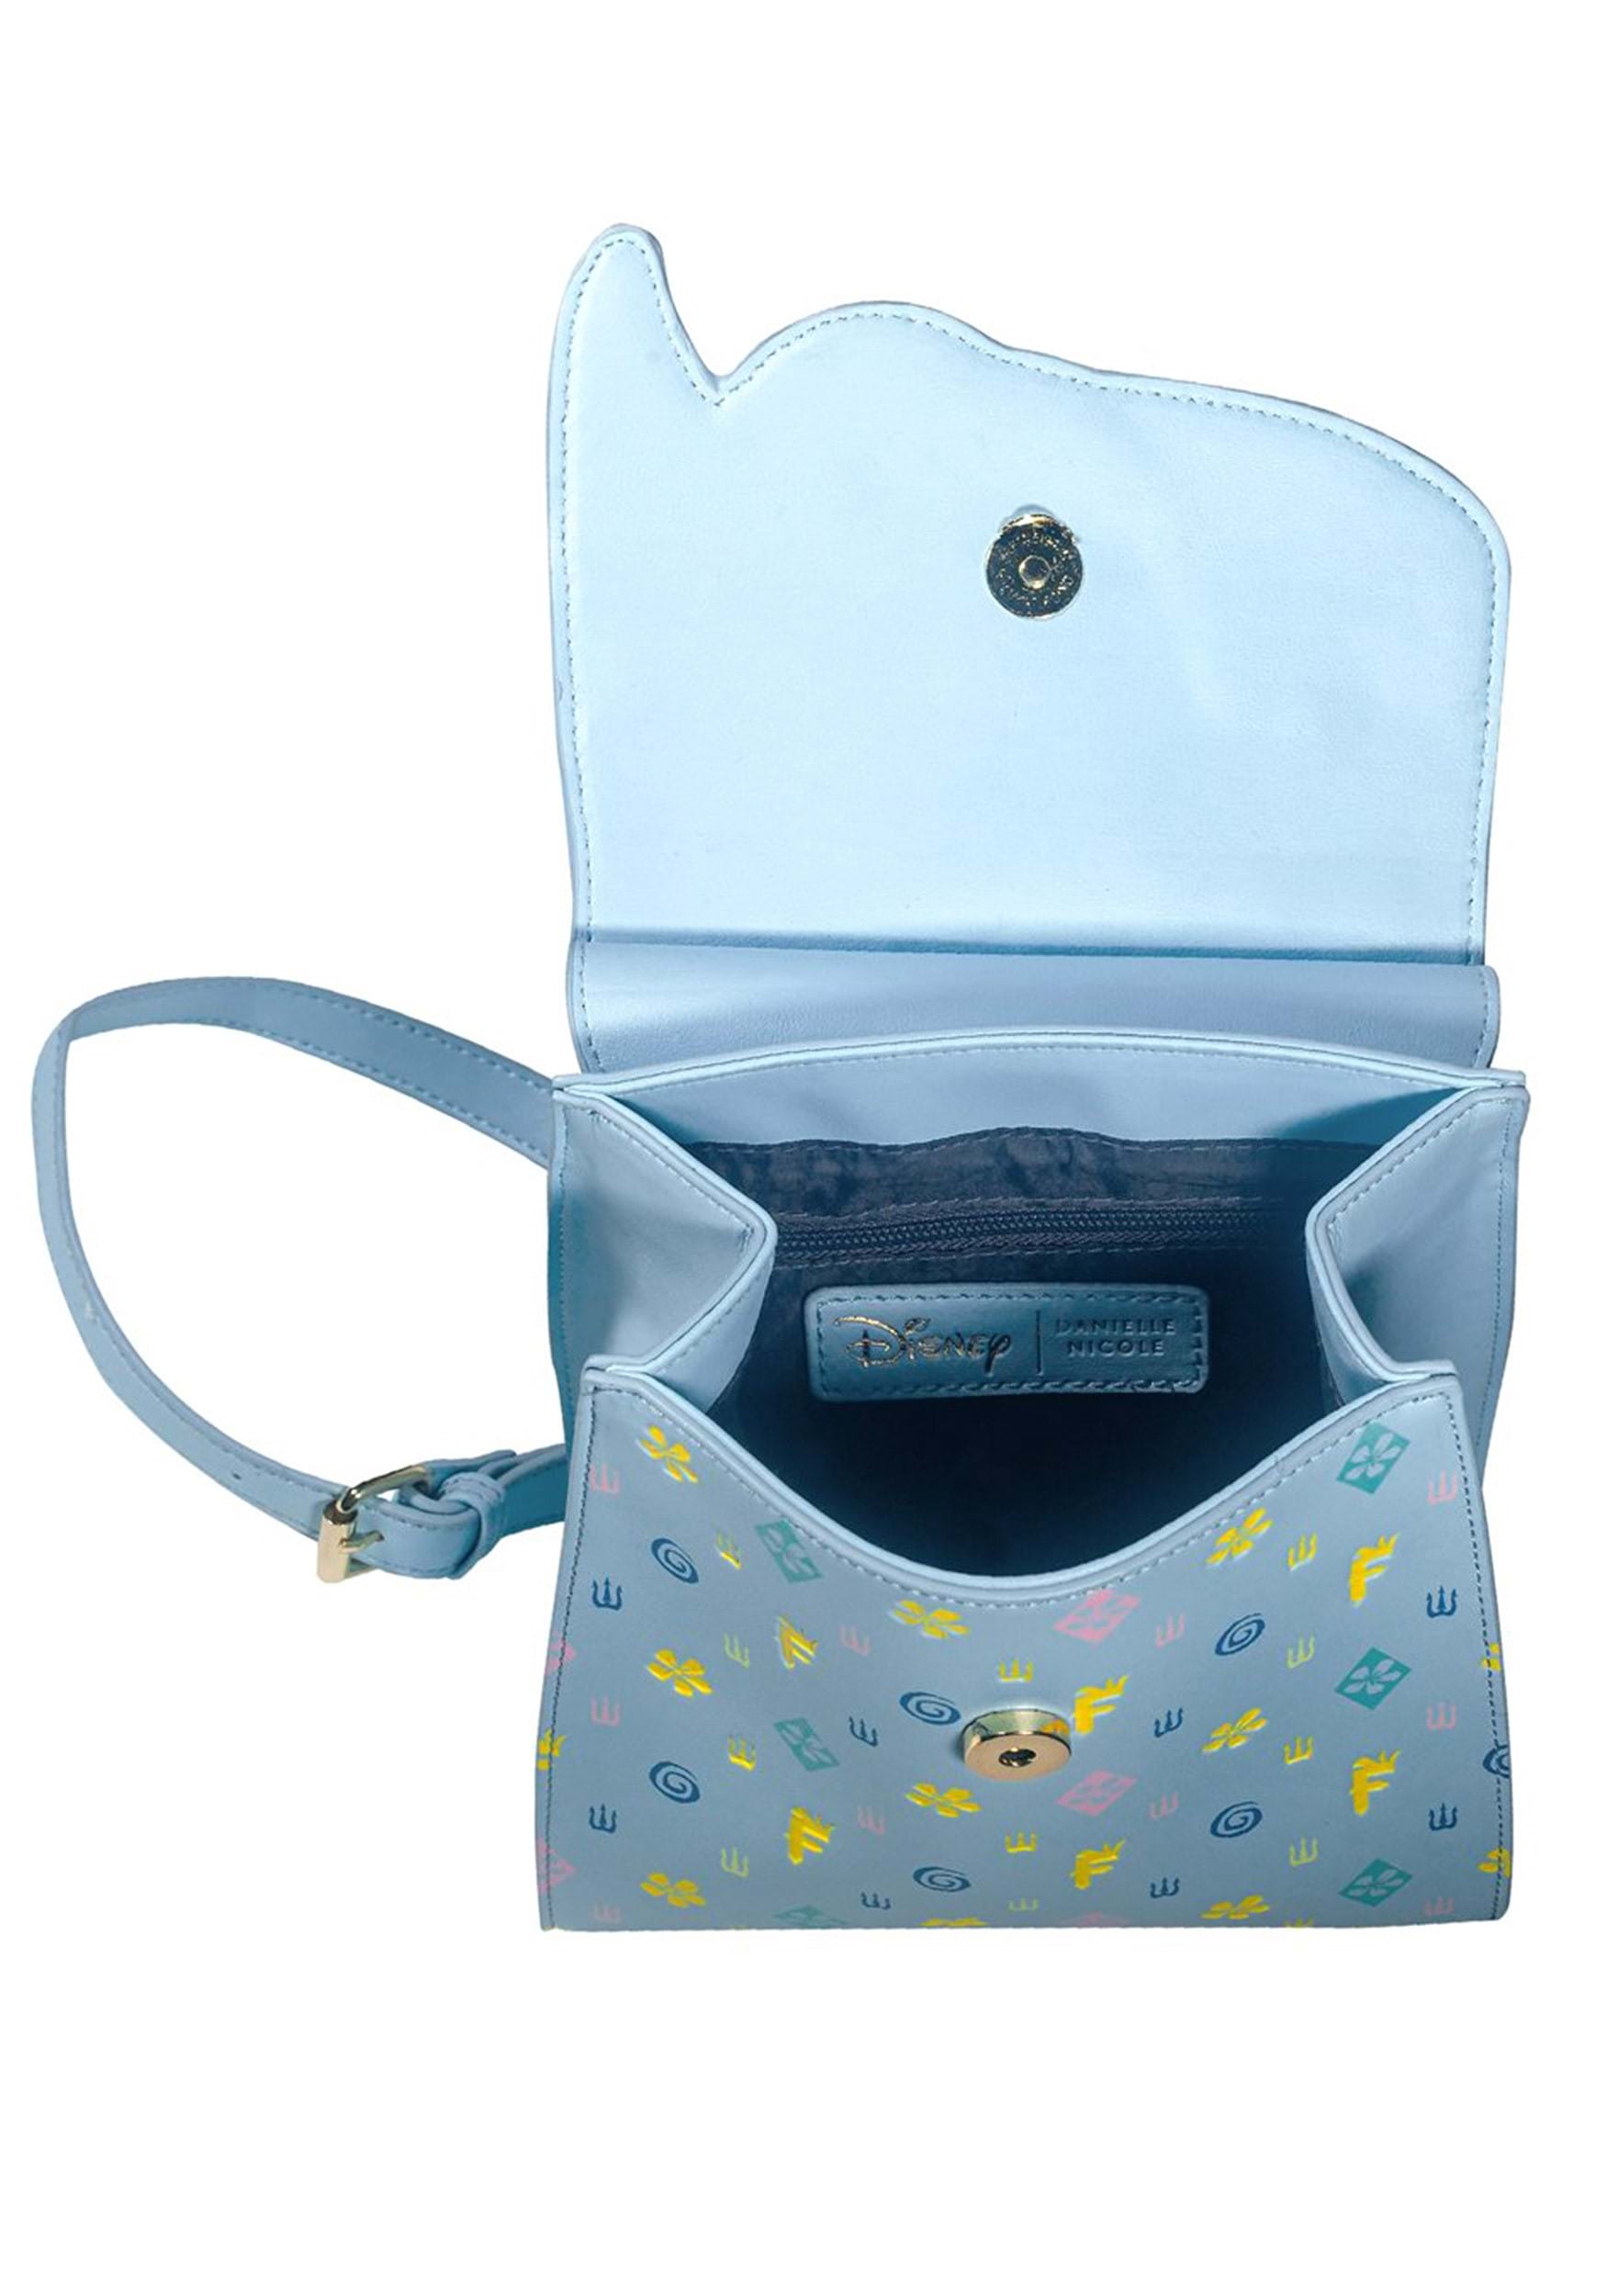 Little Mermaid Flounder Monogram Danielle Nicole Mini Backpack